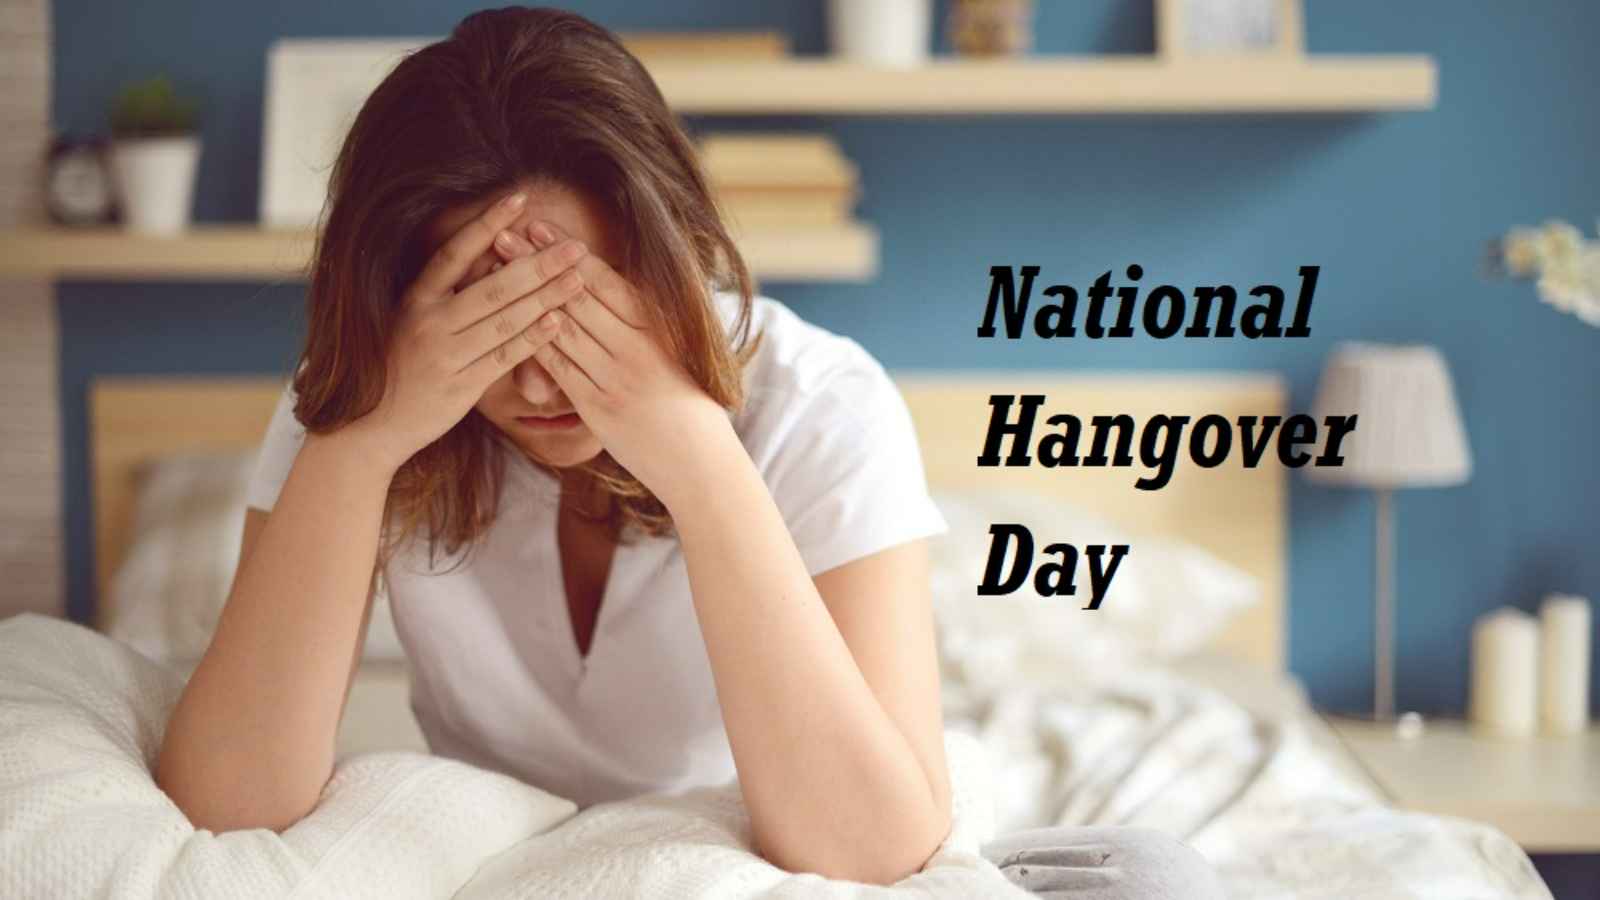 National Hangover Day – January 1, 2023